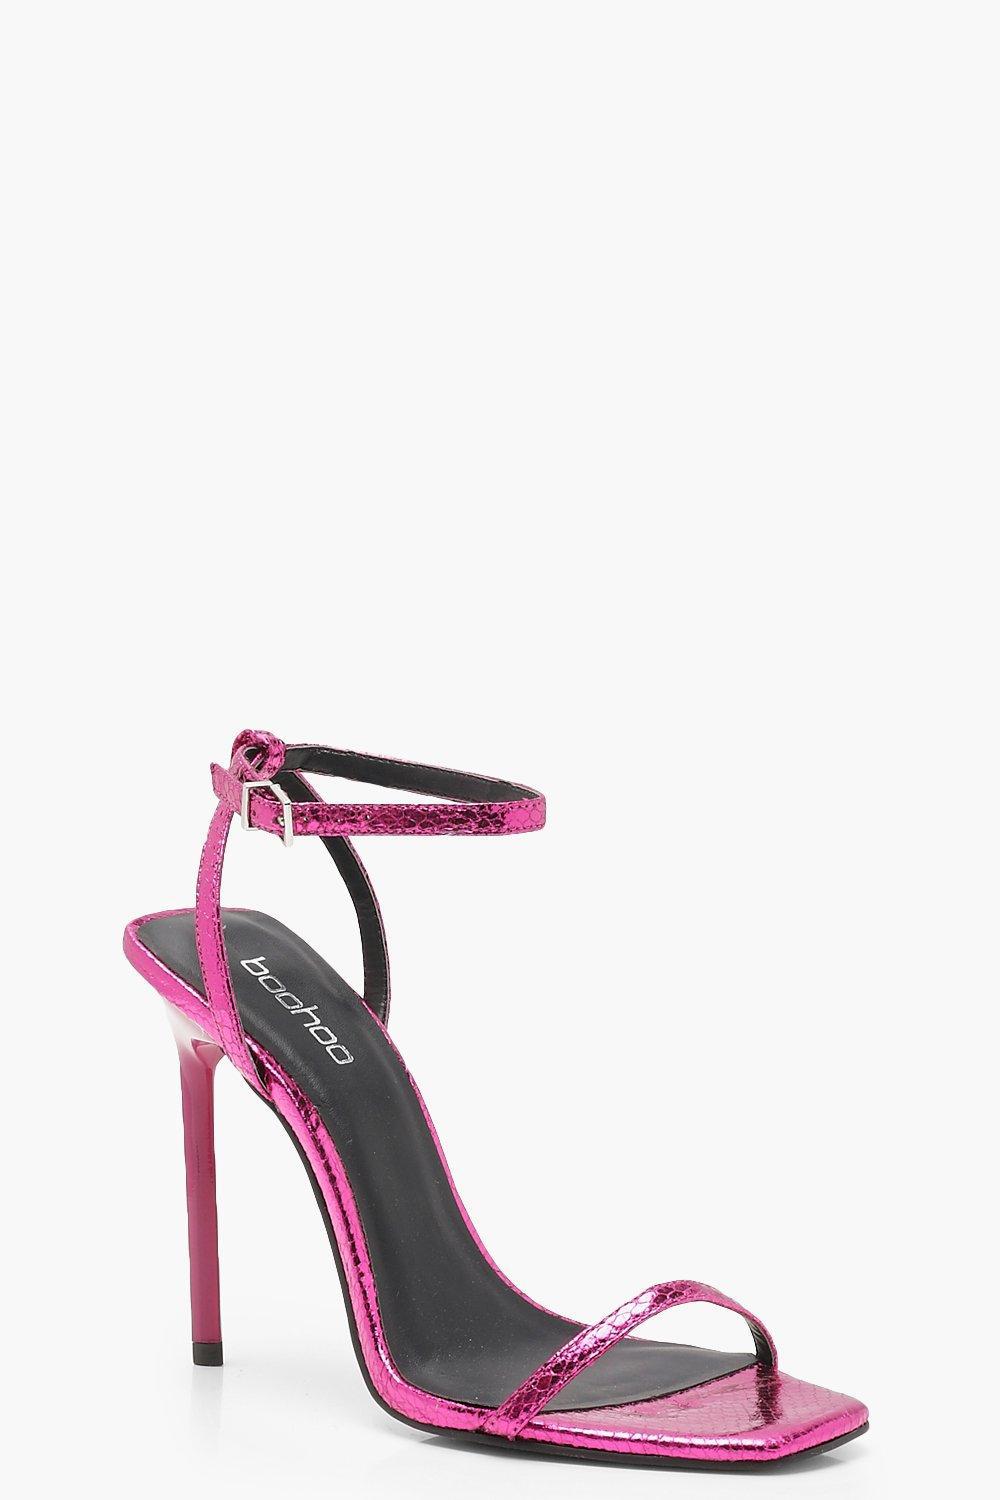 Buy > hot pink square heels > in stock